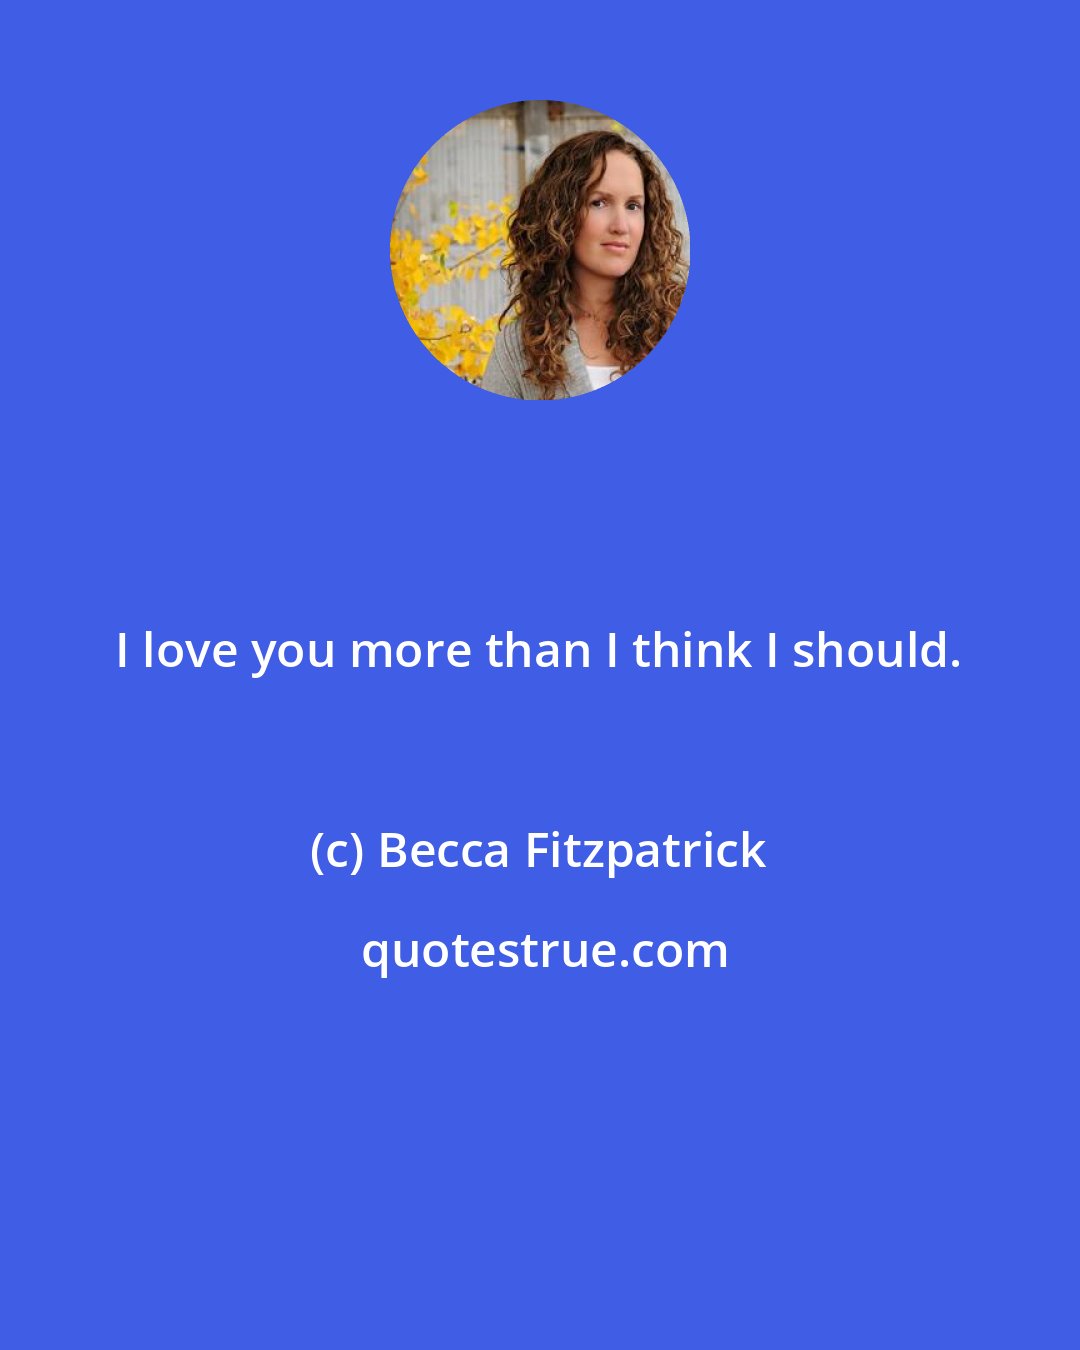 Becca Fitzpatrick: I love you more than I think I should.